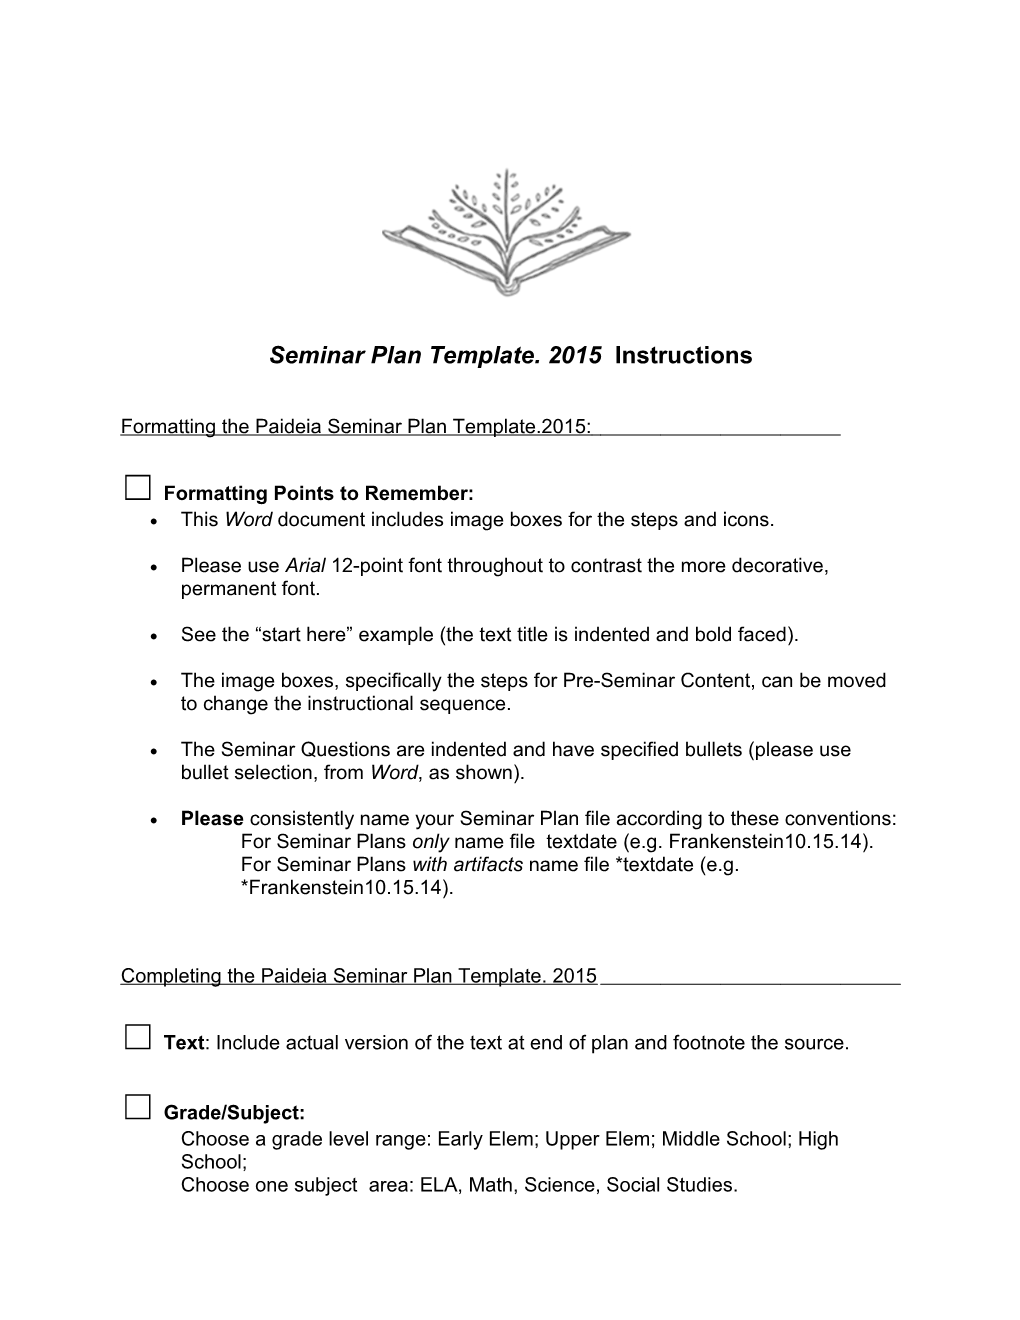 Seminar Plan Template.2015 Instructions